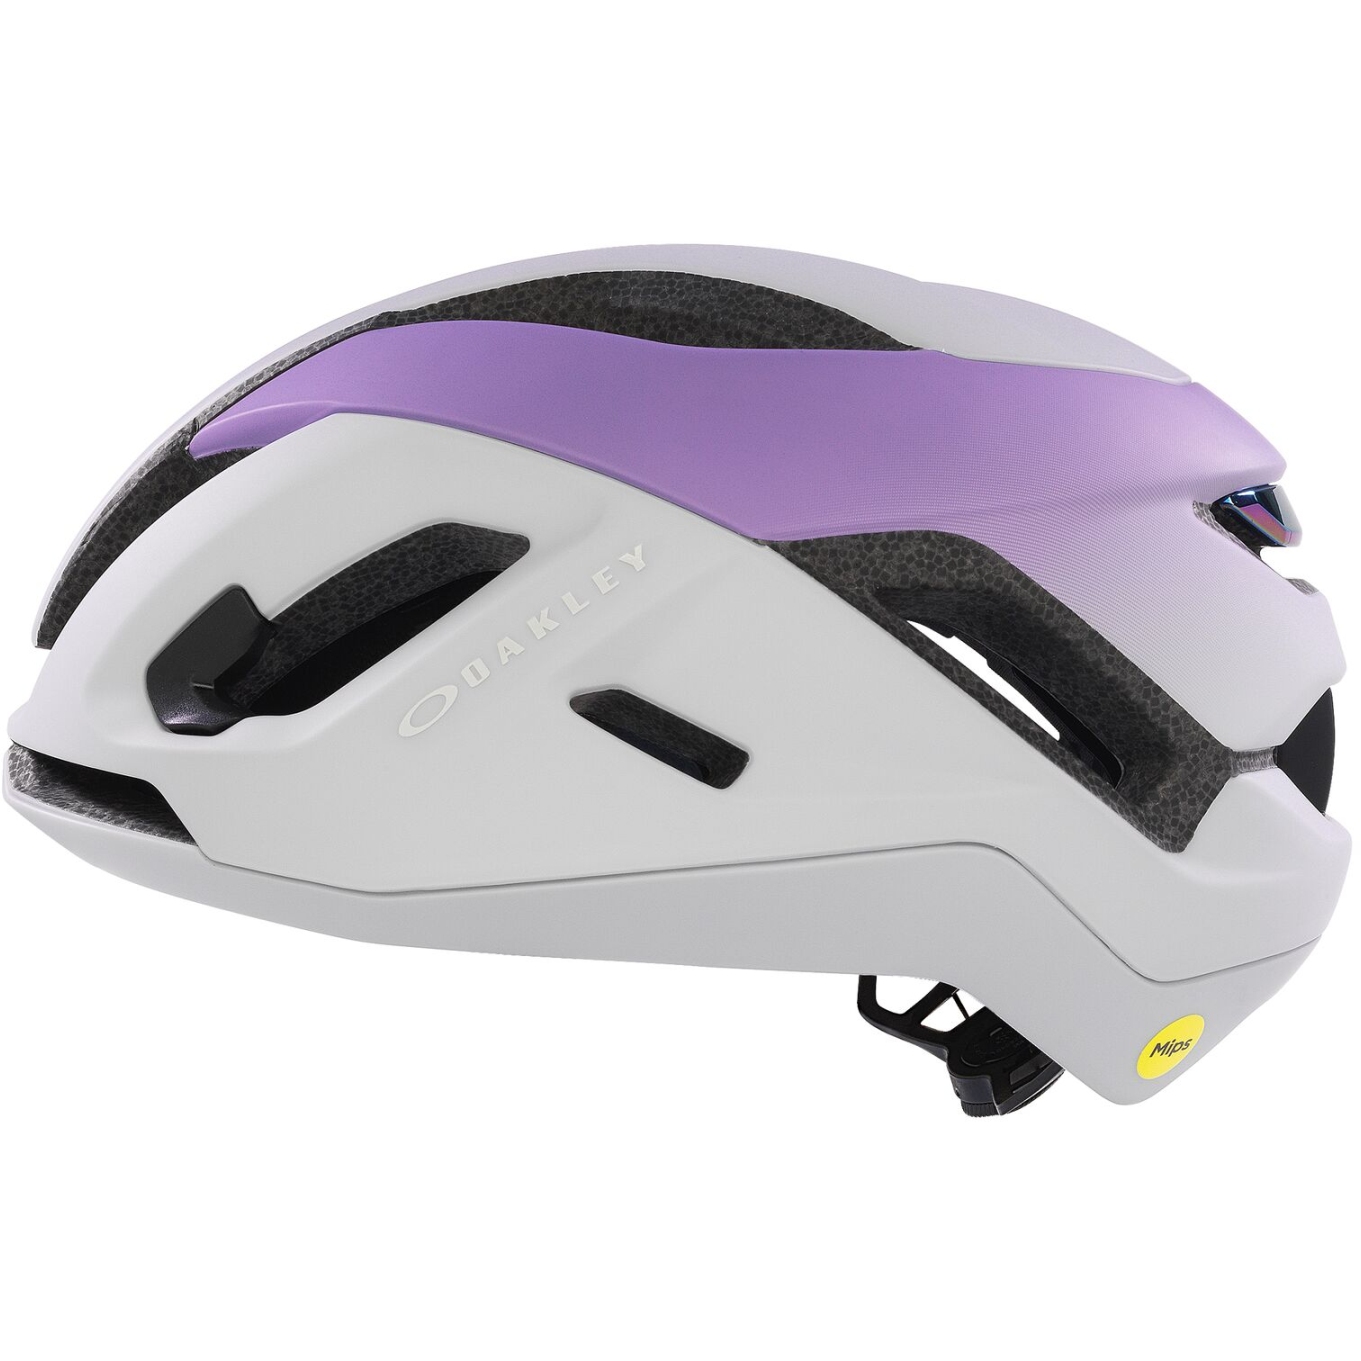 Productfoto van Oakley ARO5 Race EU Fietshelm - Light Gray/Lilac